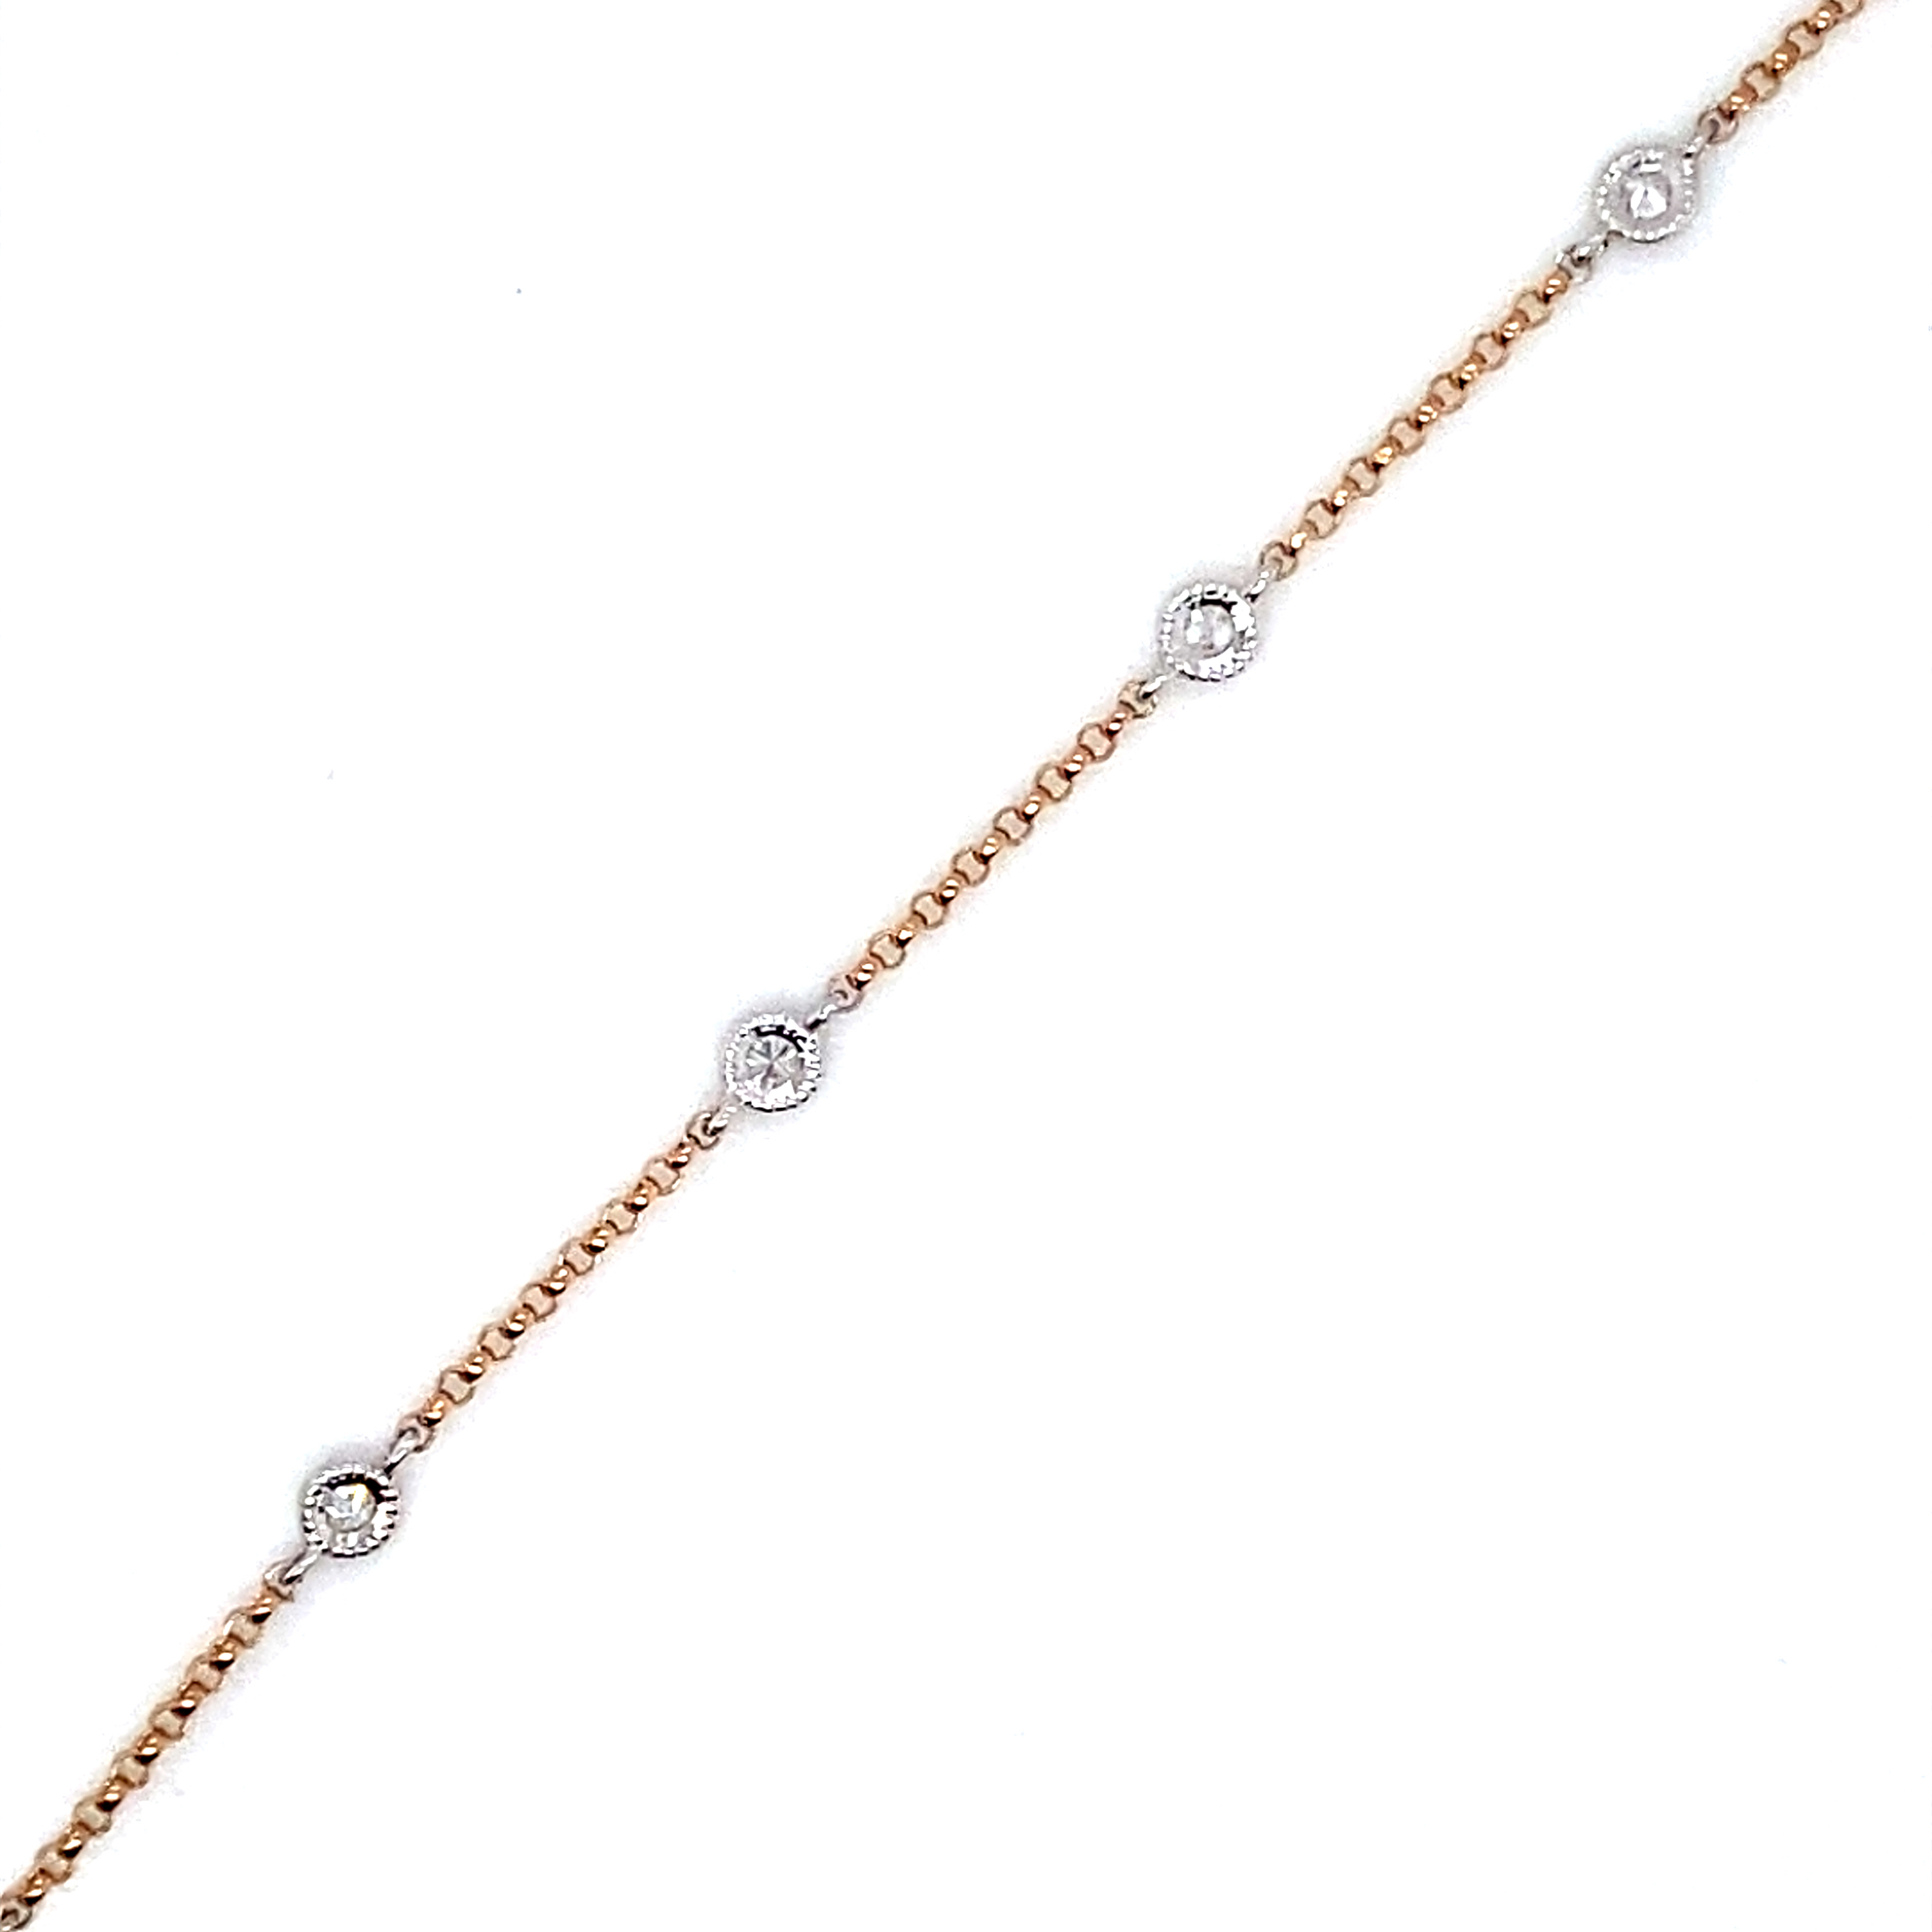 An 18 Carat Rose and White Gold Diamond Bracelet